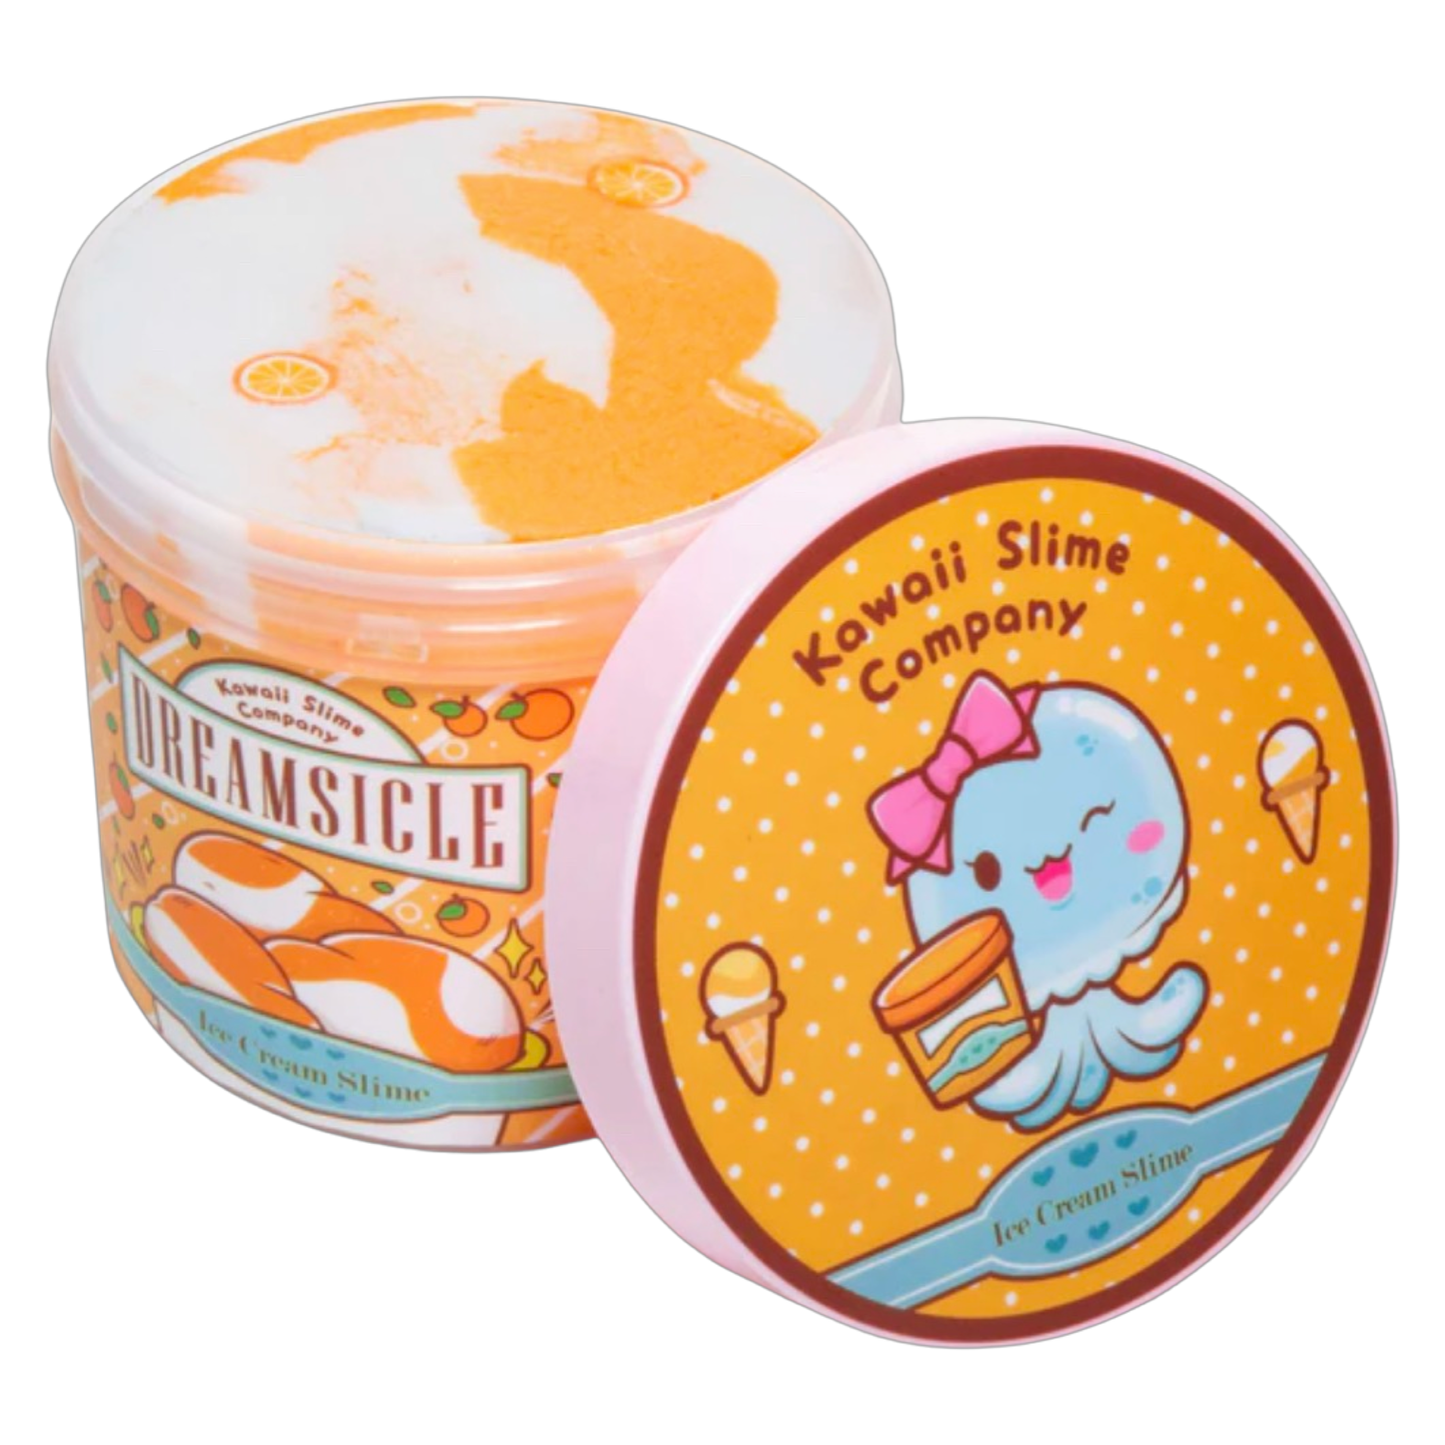 Dreamsicle Ice Cream Slime